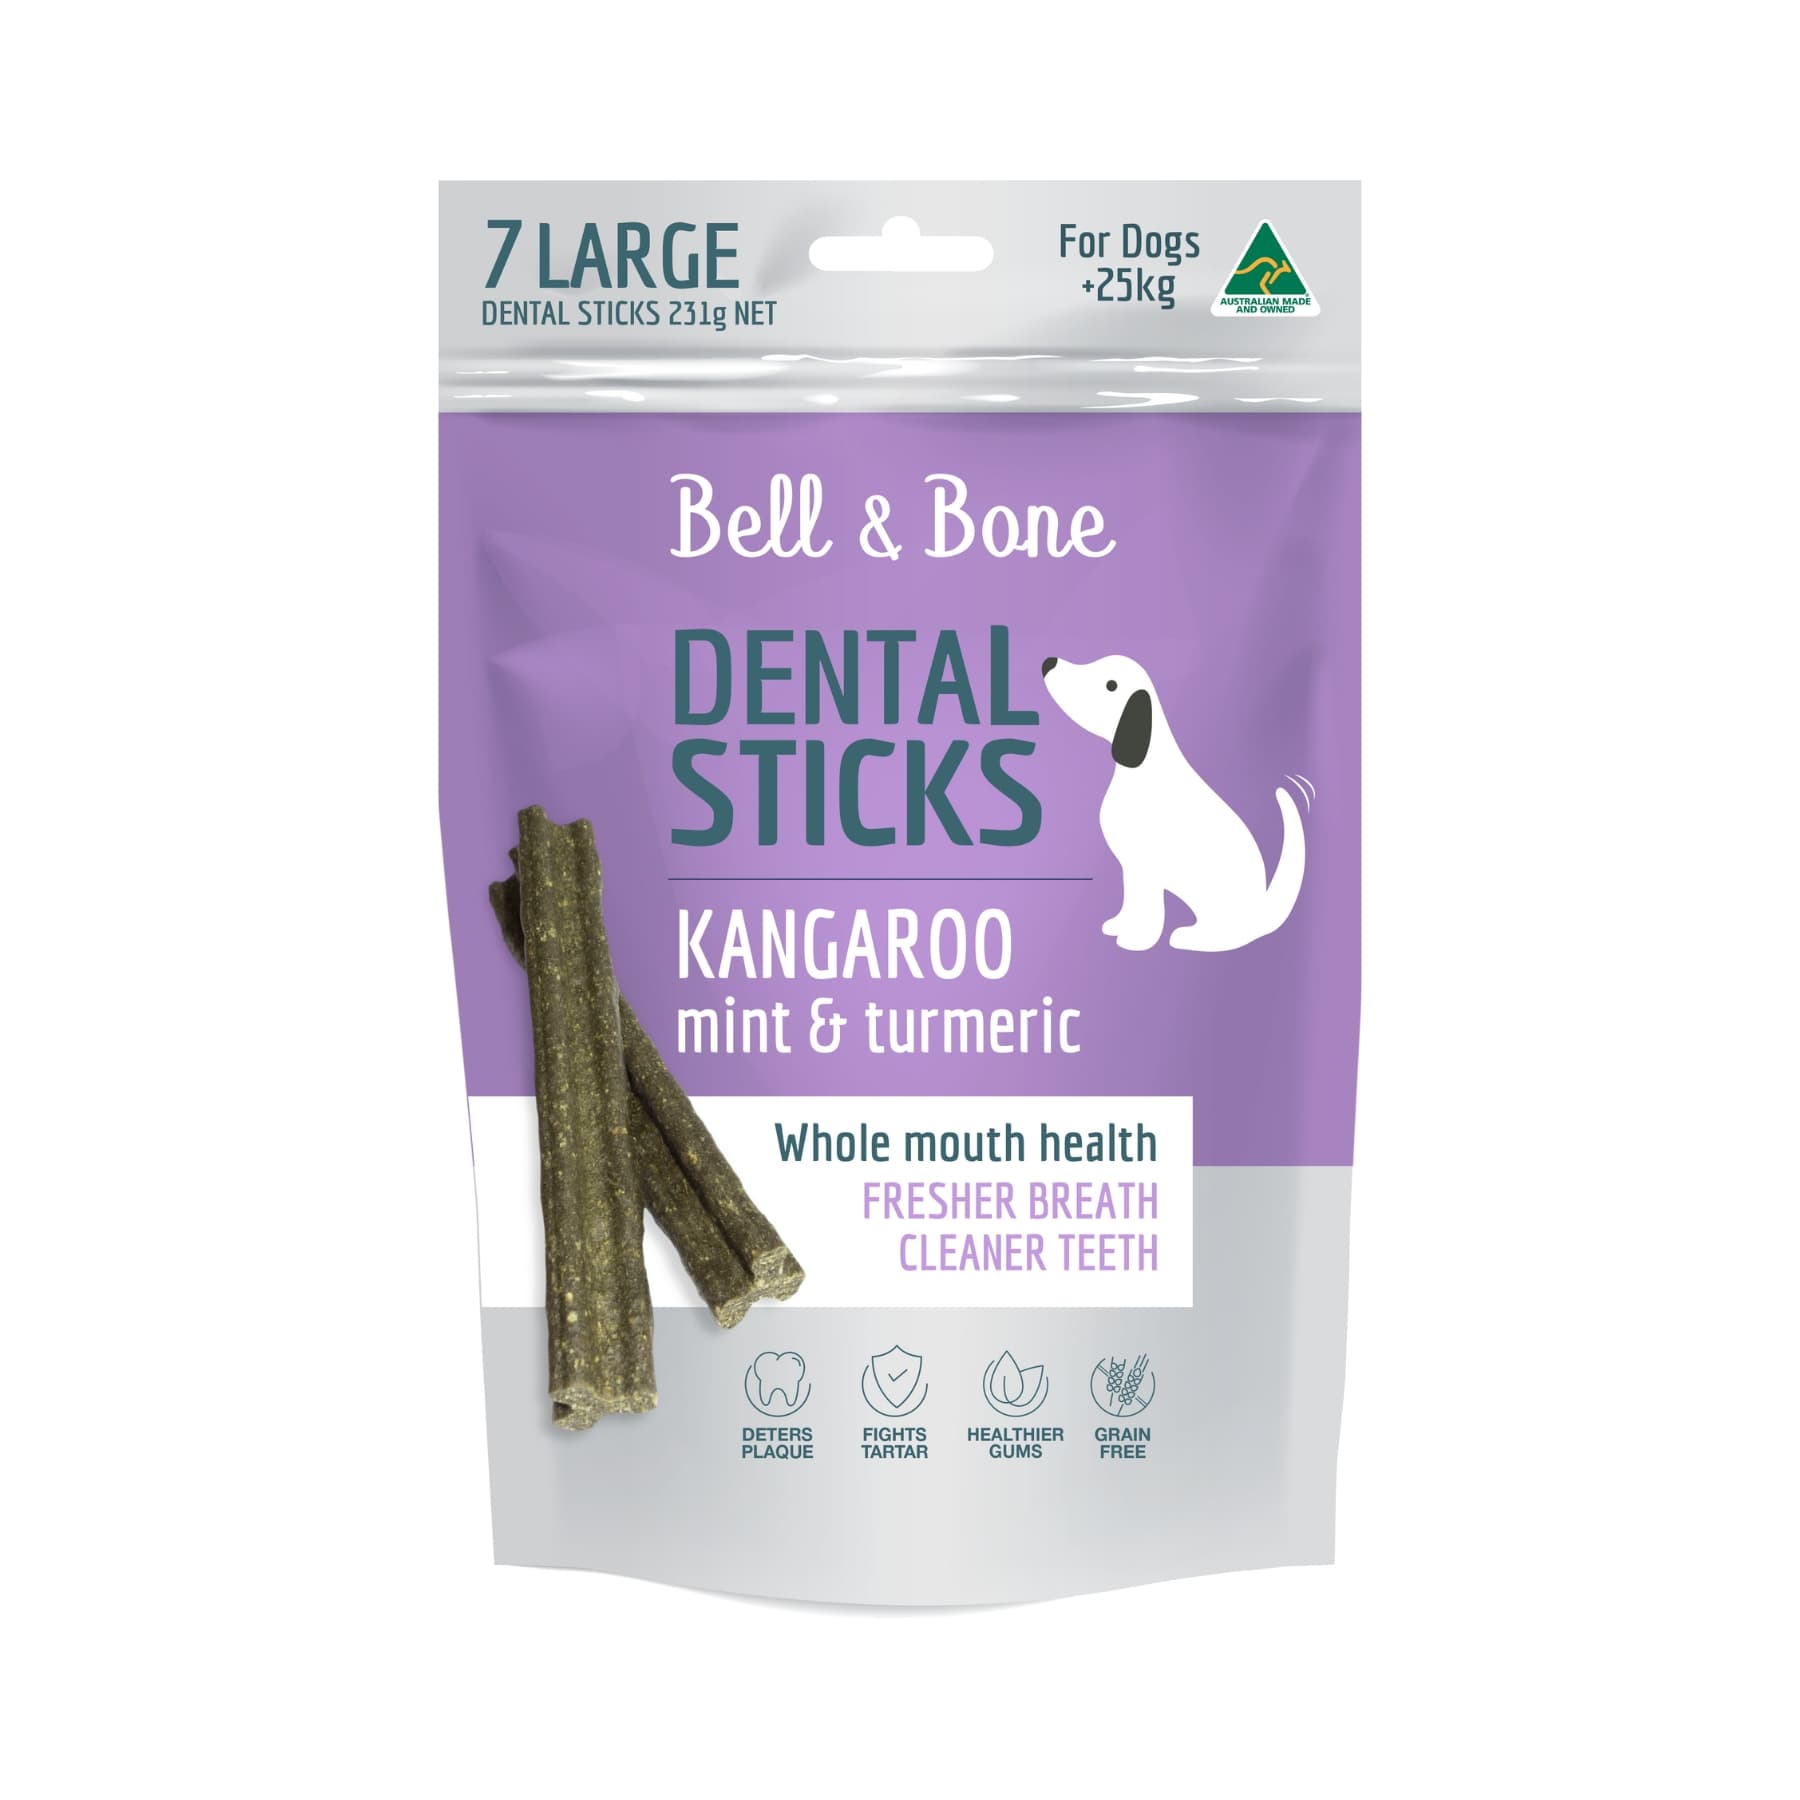 Bell & Bone Dental Sticks Kangaroo, Mint & Turmeric Large. Australian Made Dental Treats for Dogs